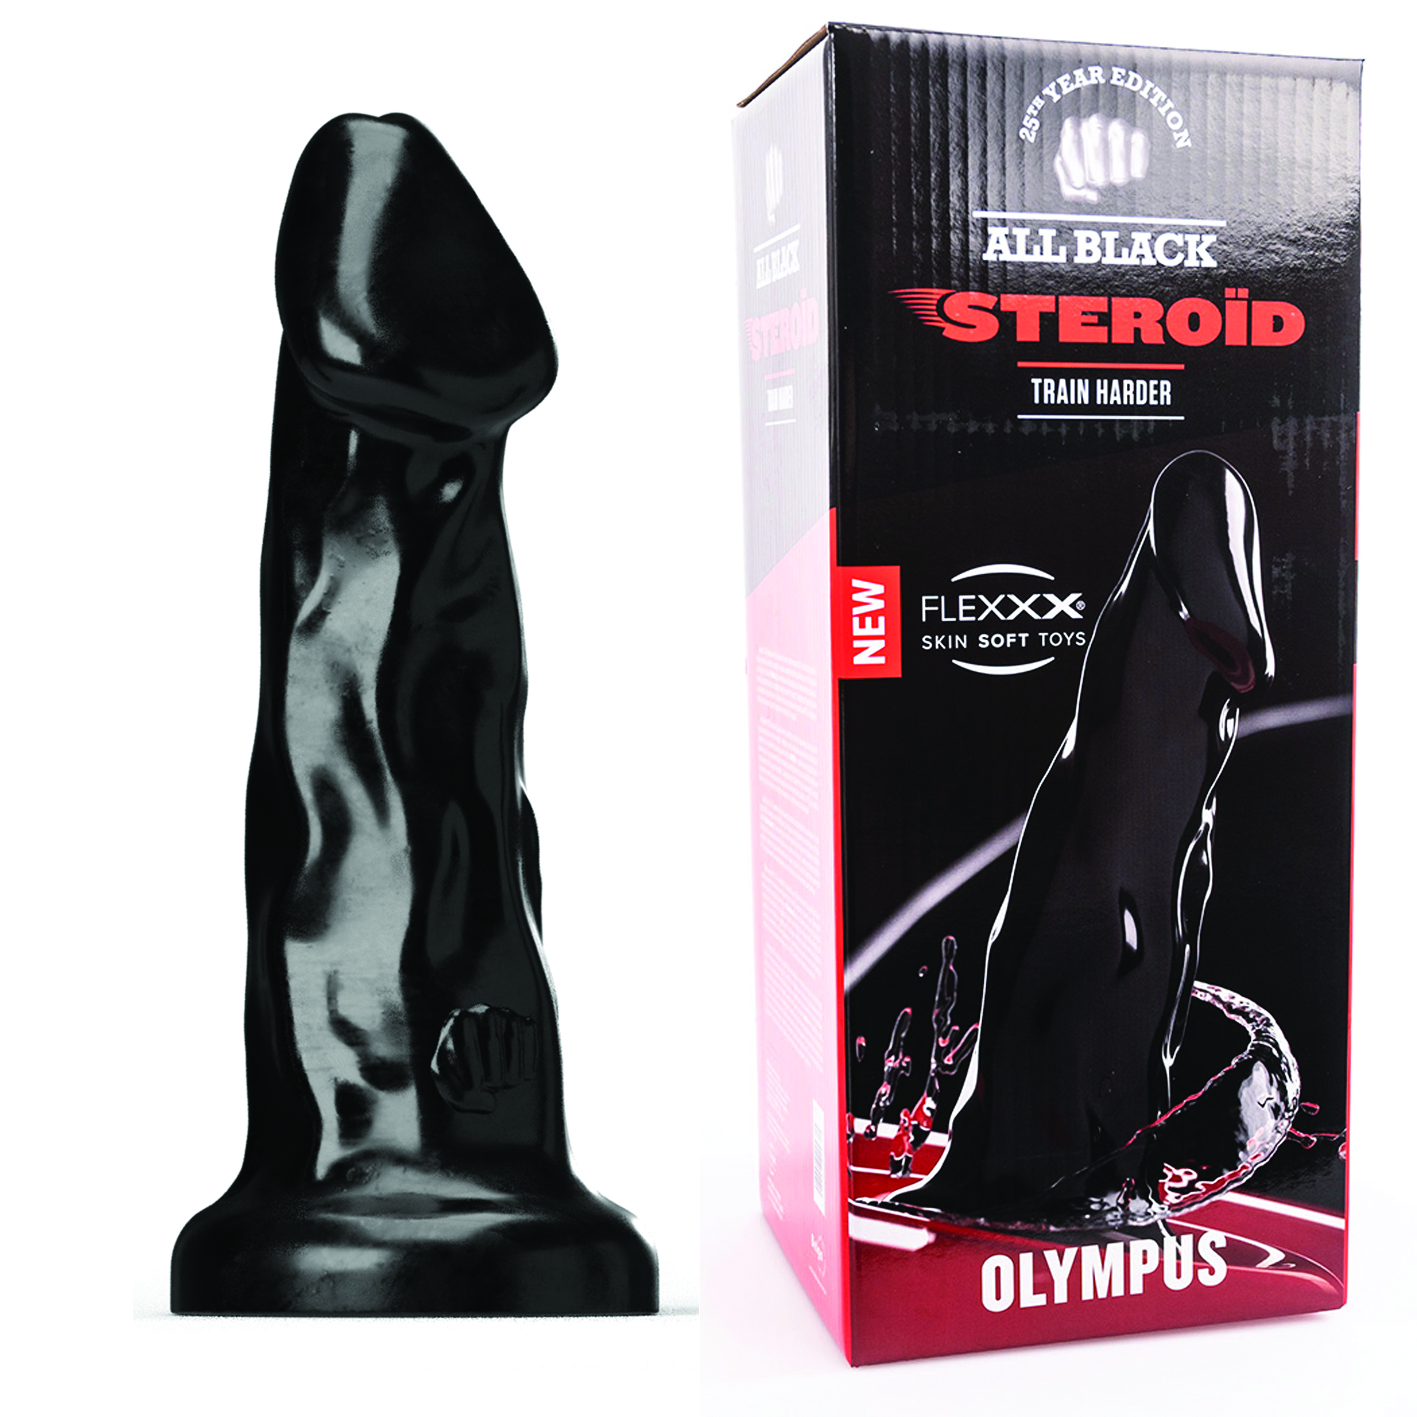 ALL BLACK STEROID Olympus Black